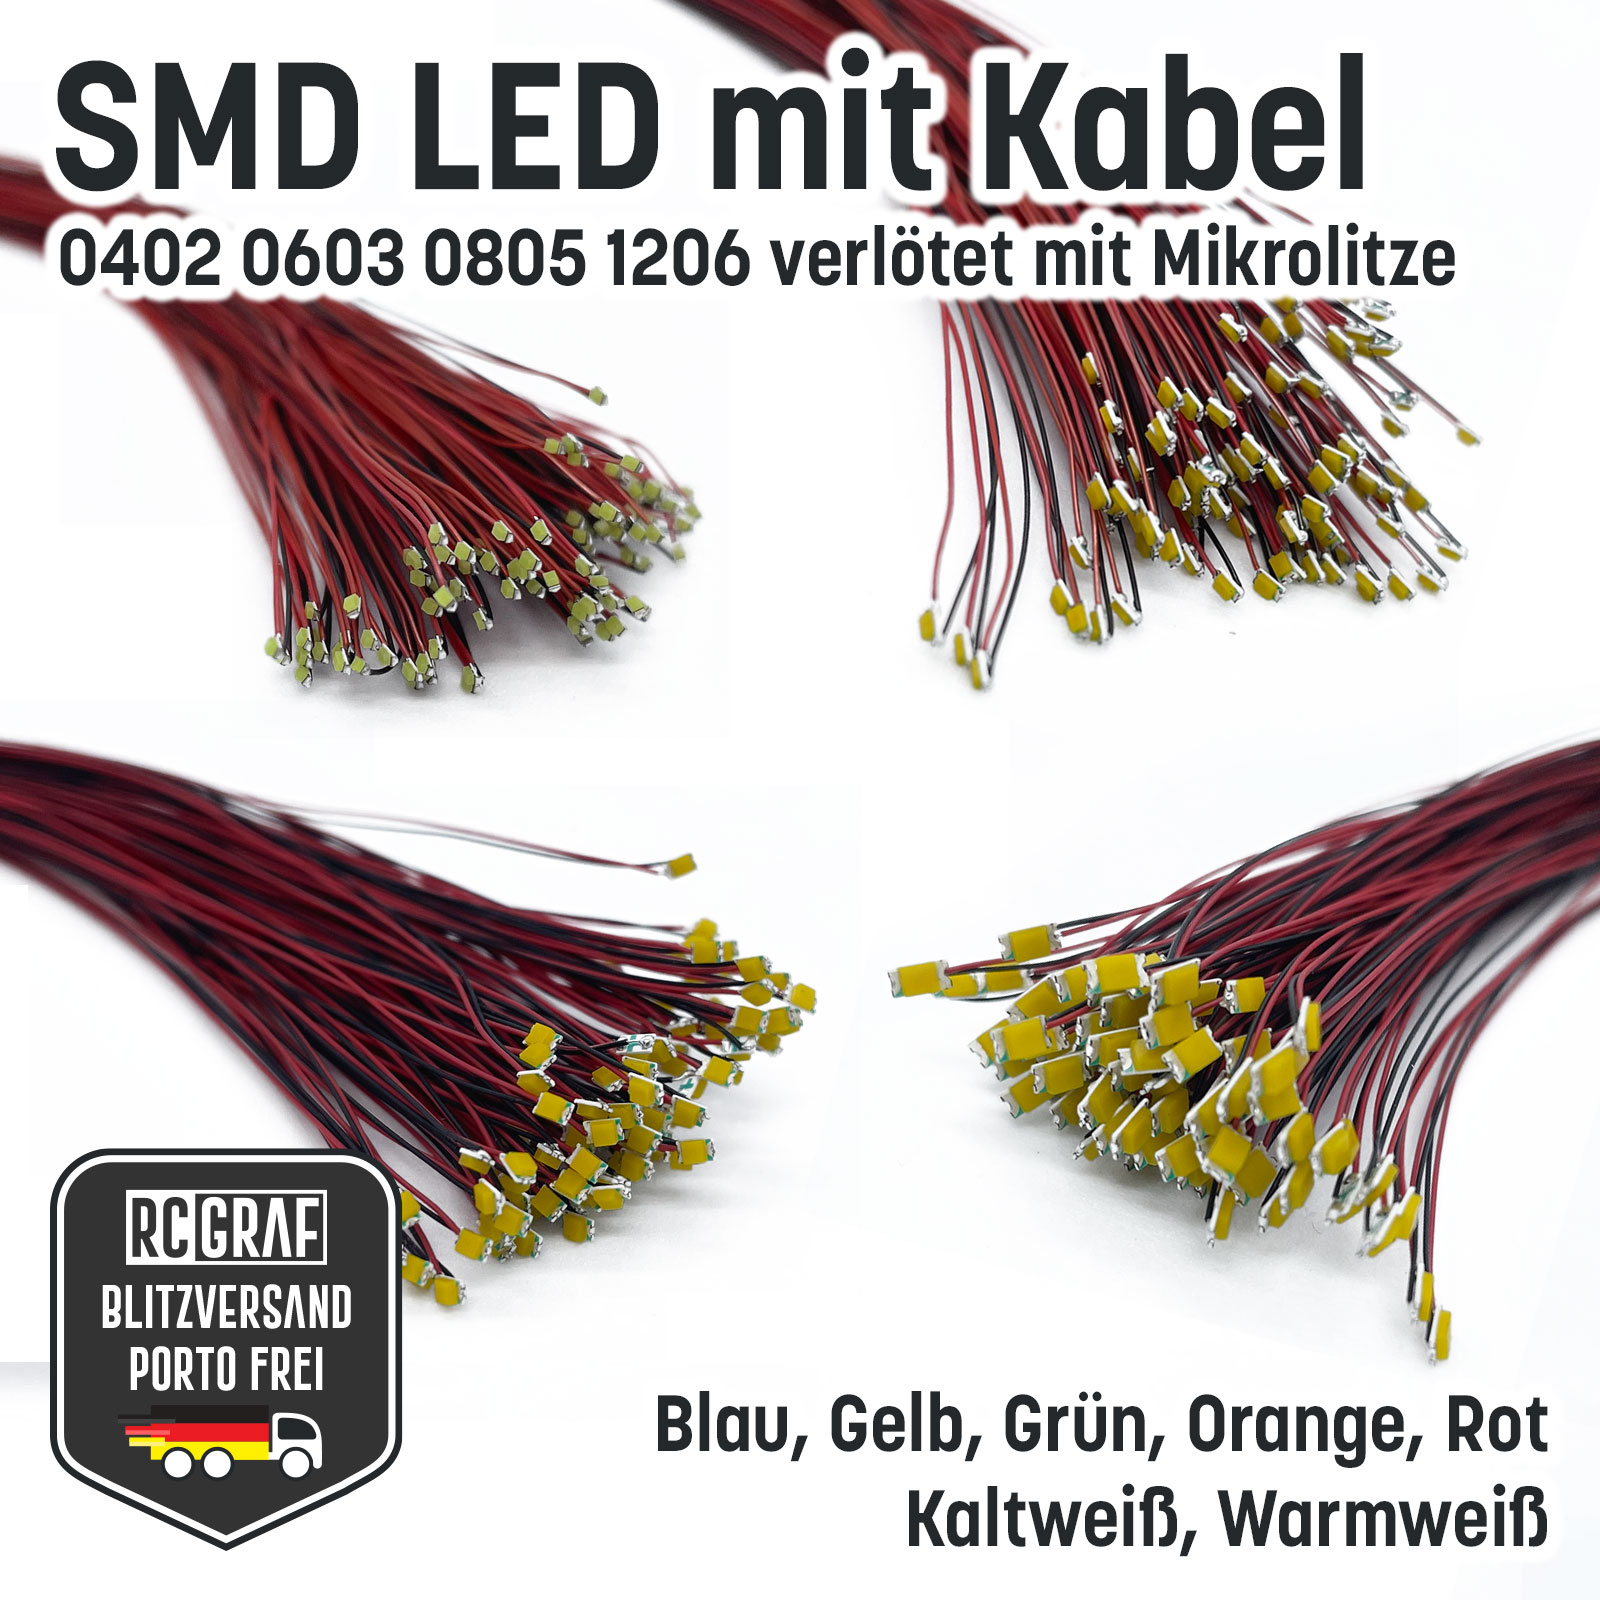 SMD LED 0402 0603 0805 1206 Mikrolitze verlötet Litze Kabel Mini LEDs viele Farben